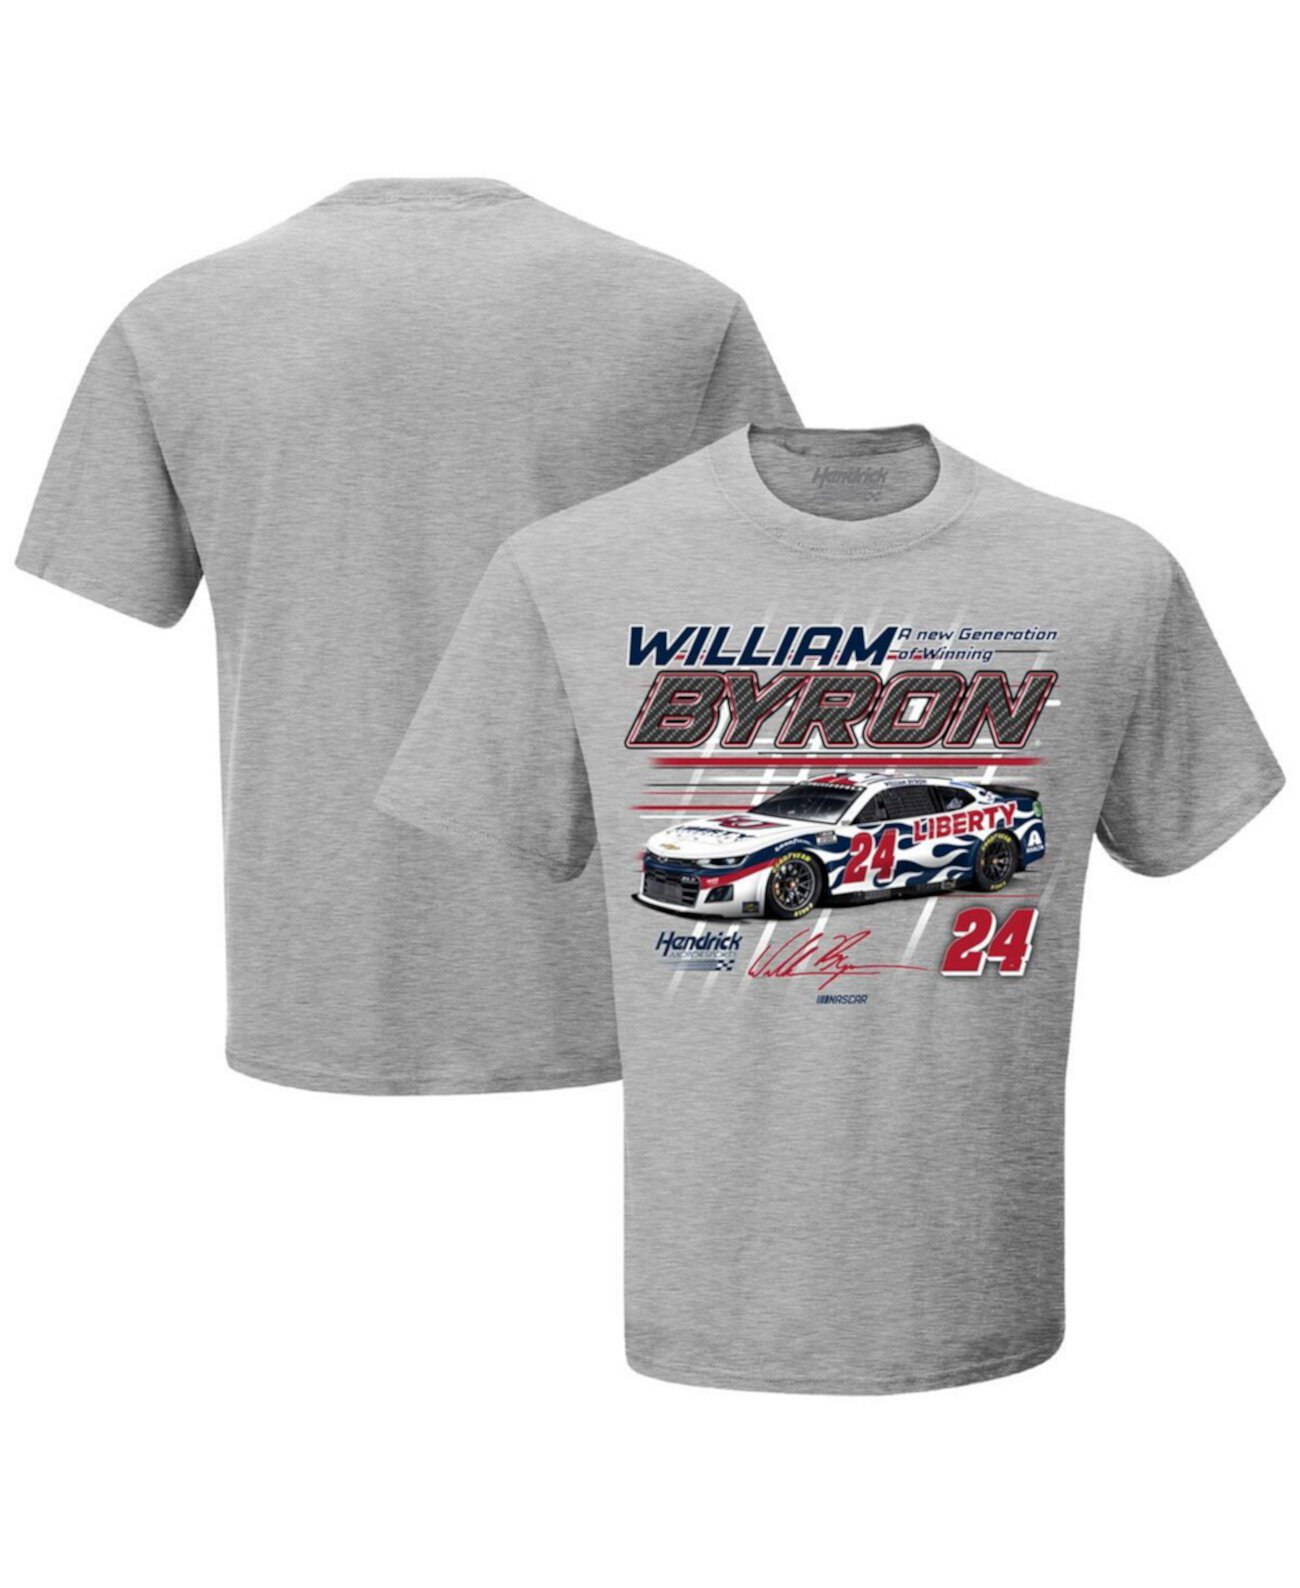 Мужская футболка William Byron Downforce с меланжевым серым оттенком Hendrick Motorsports Team Collection